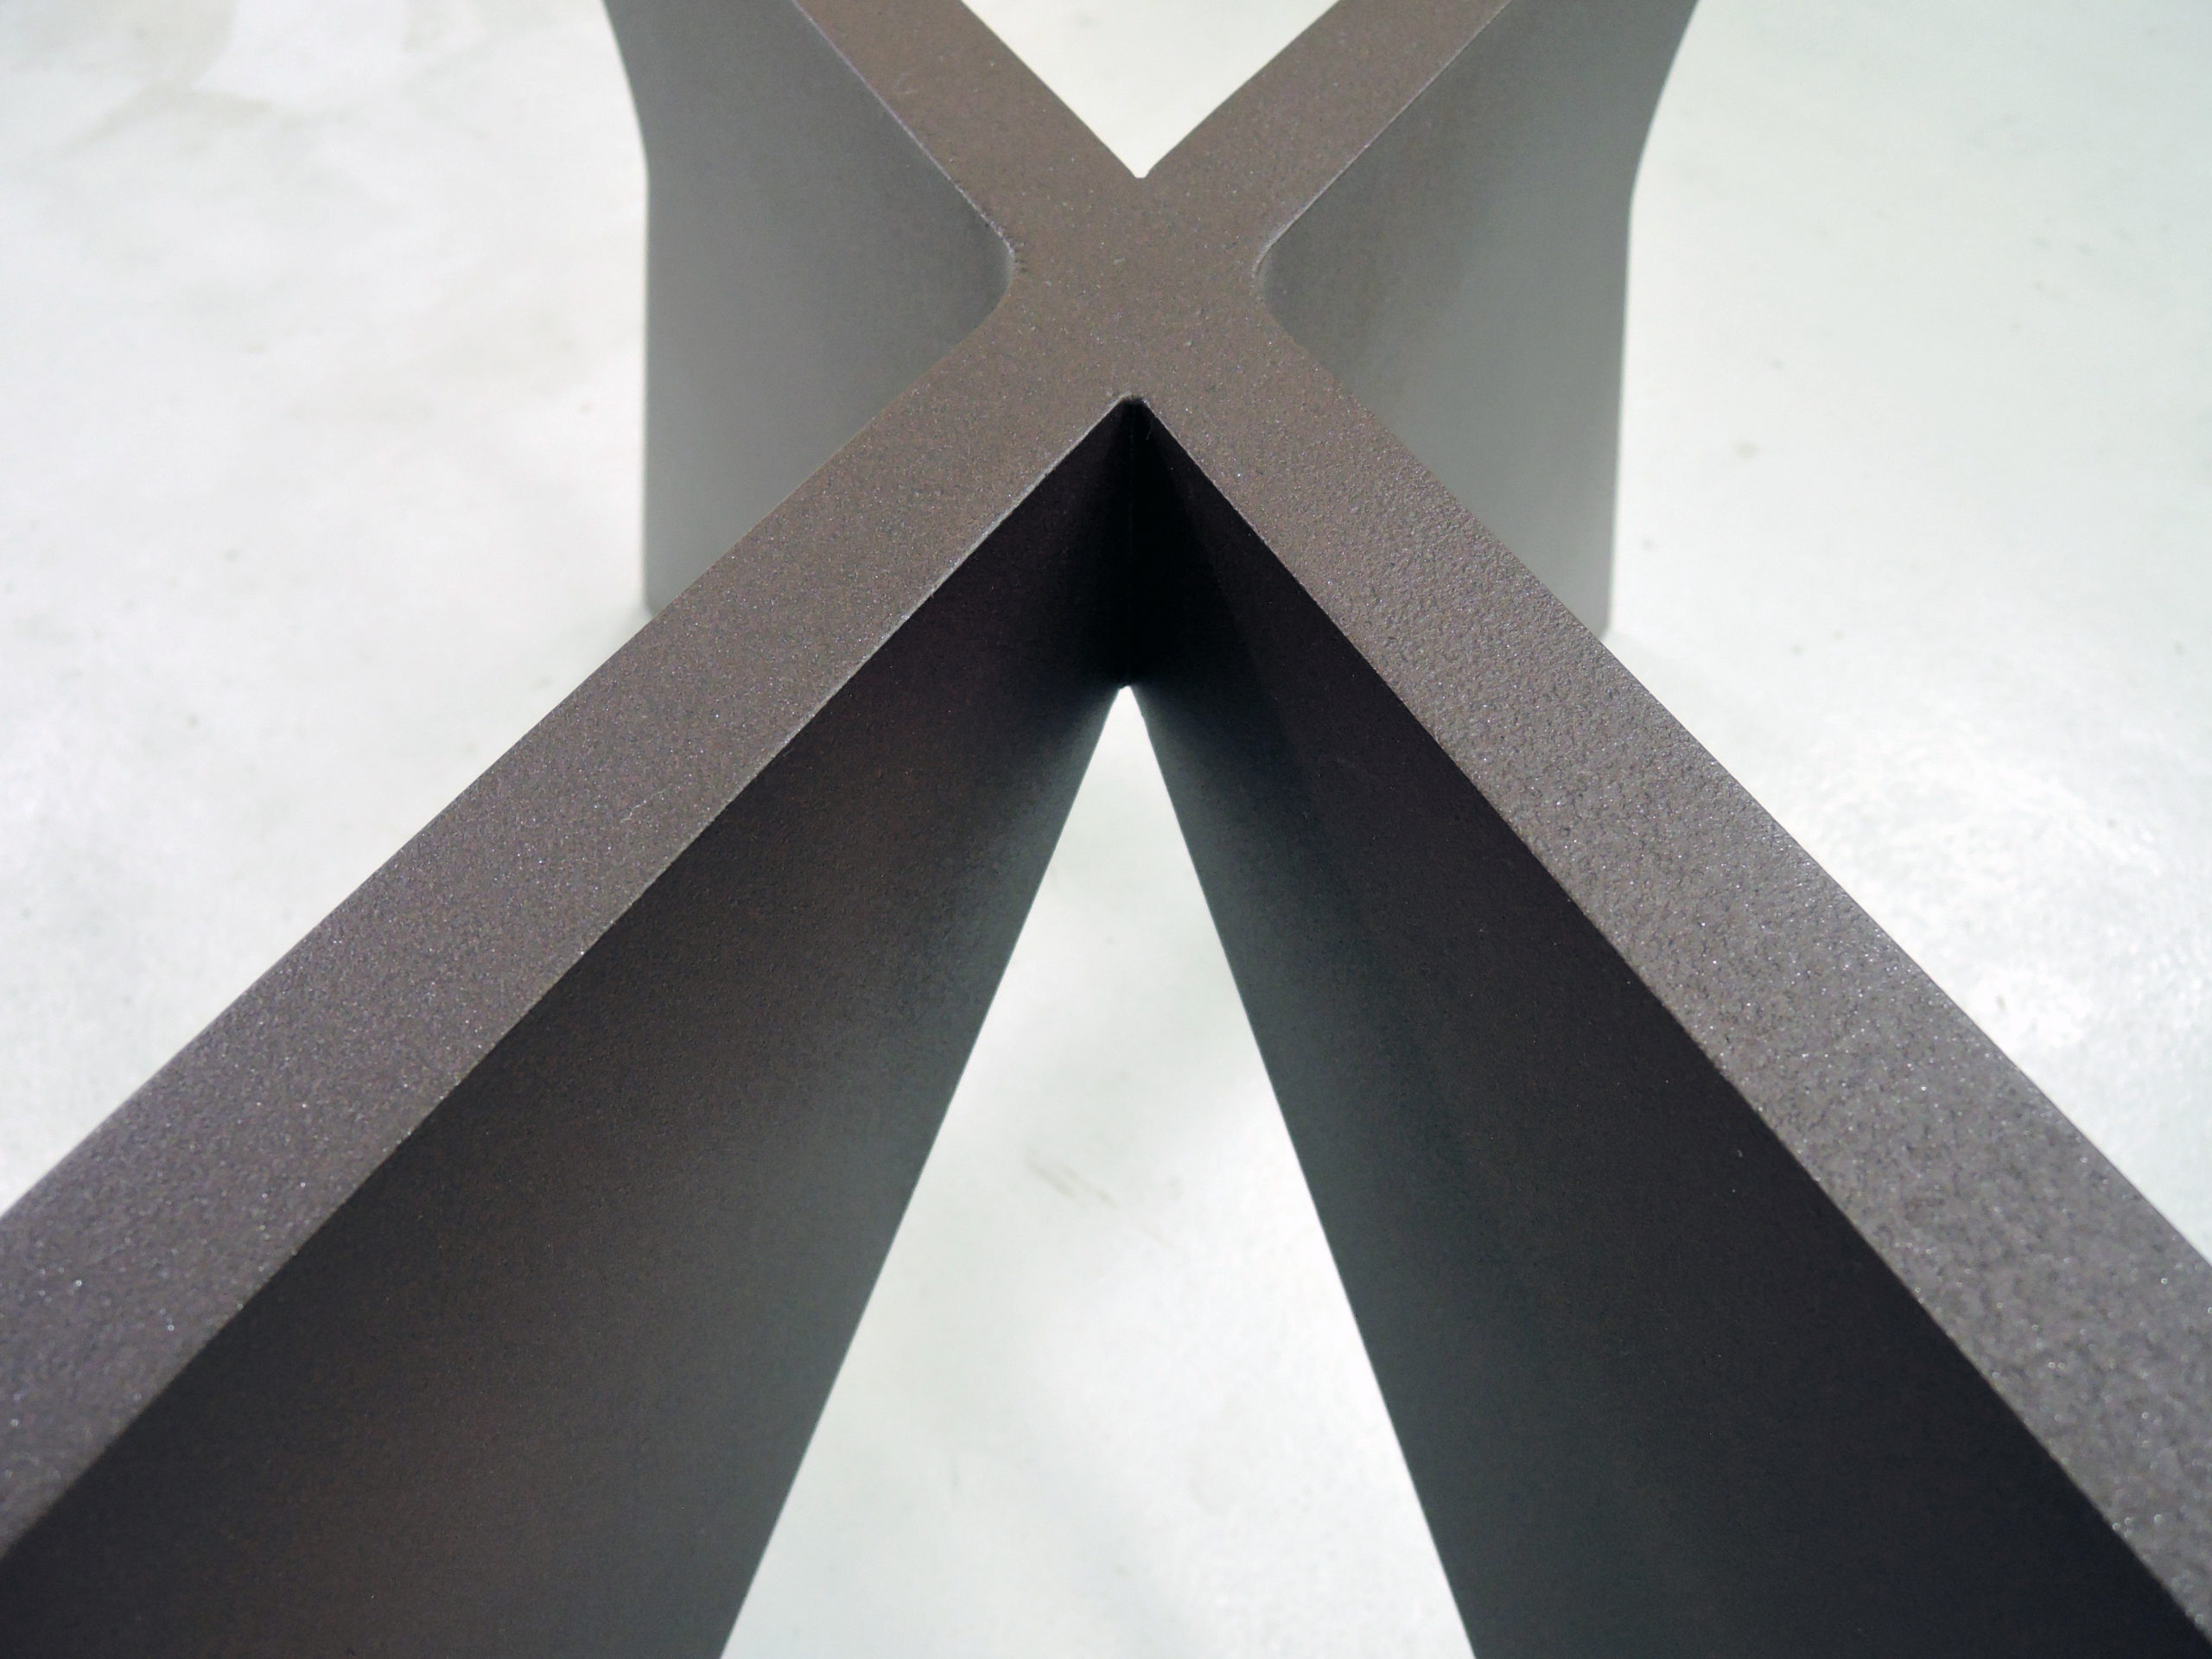 ARTMETA / pied de table Méduse sur mesure en aluminium pleine masse